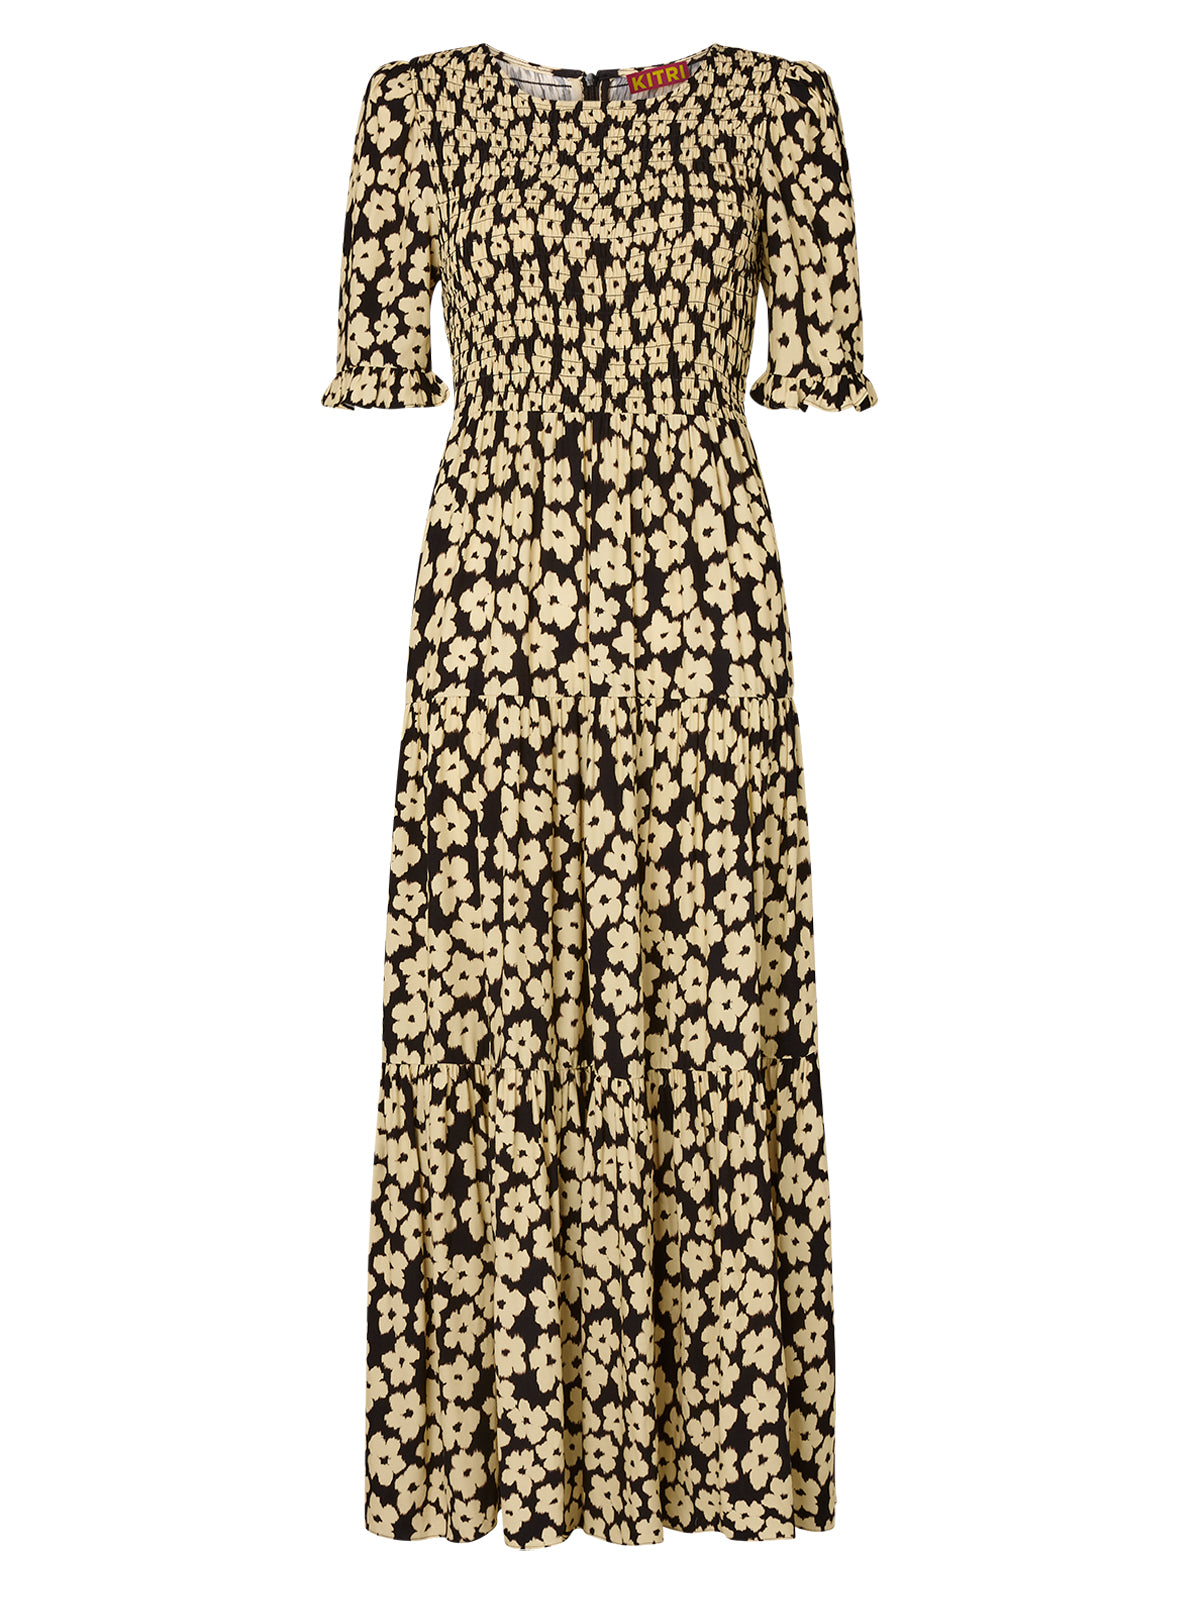 Gracie Blurred Floral Shirred Dress | KITRI Studio